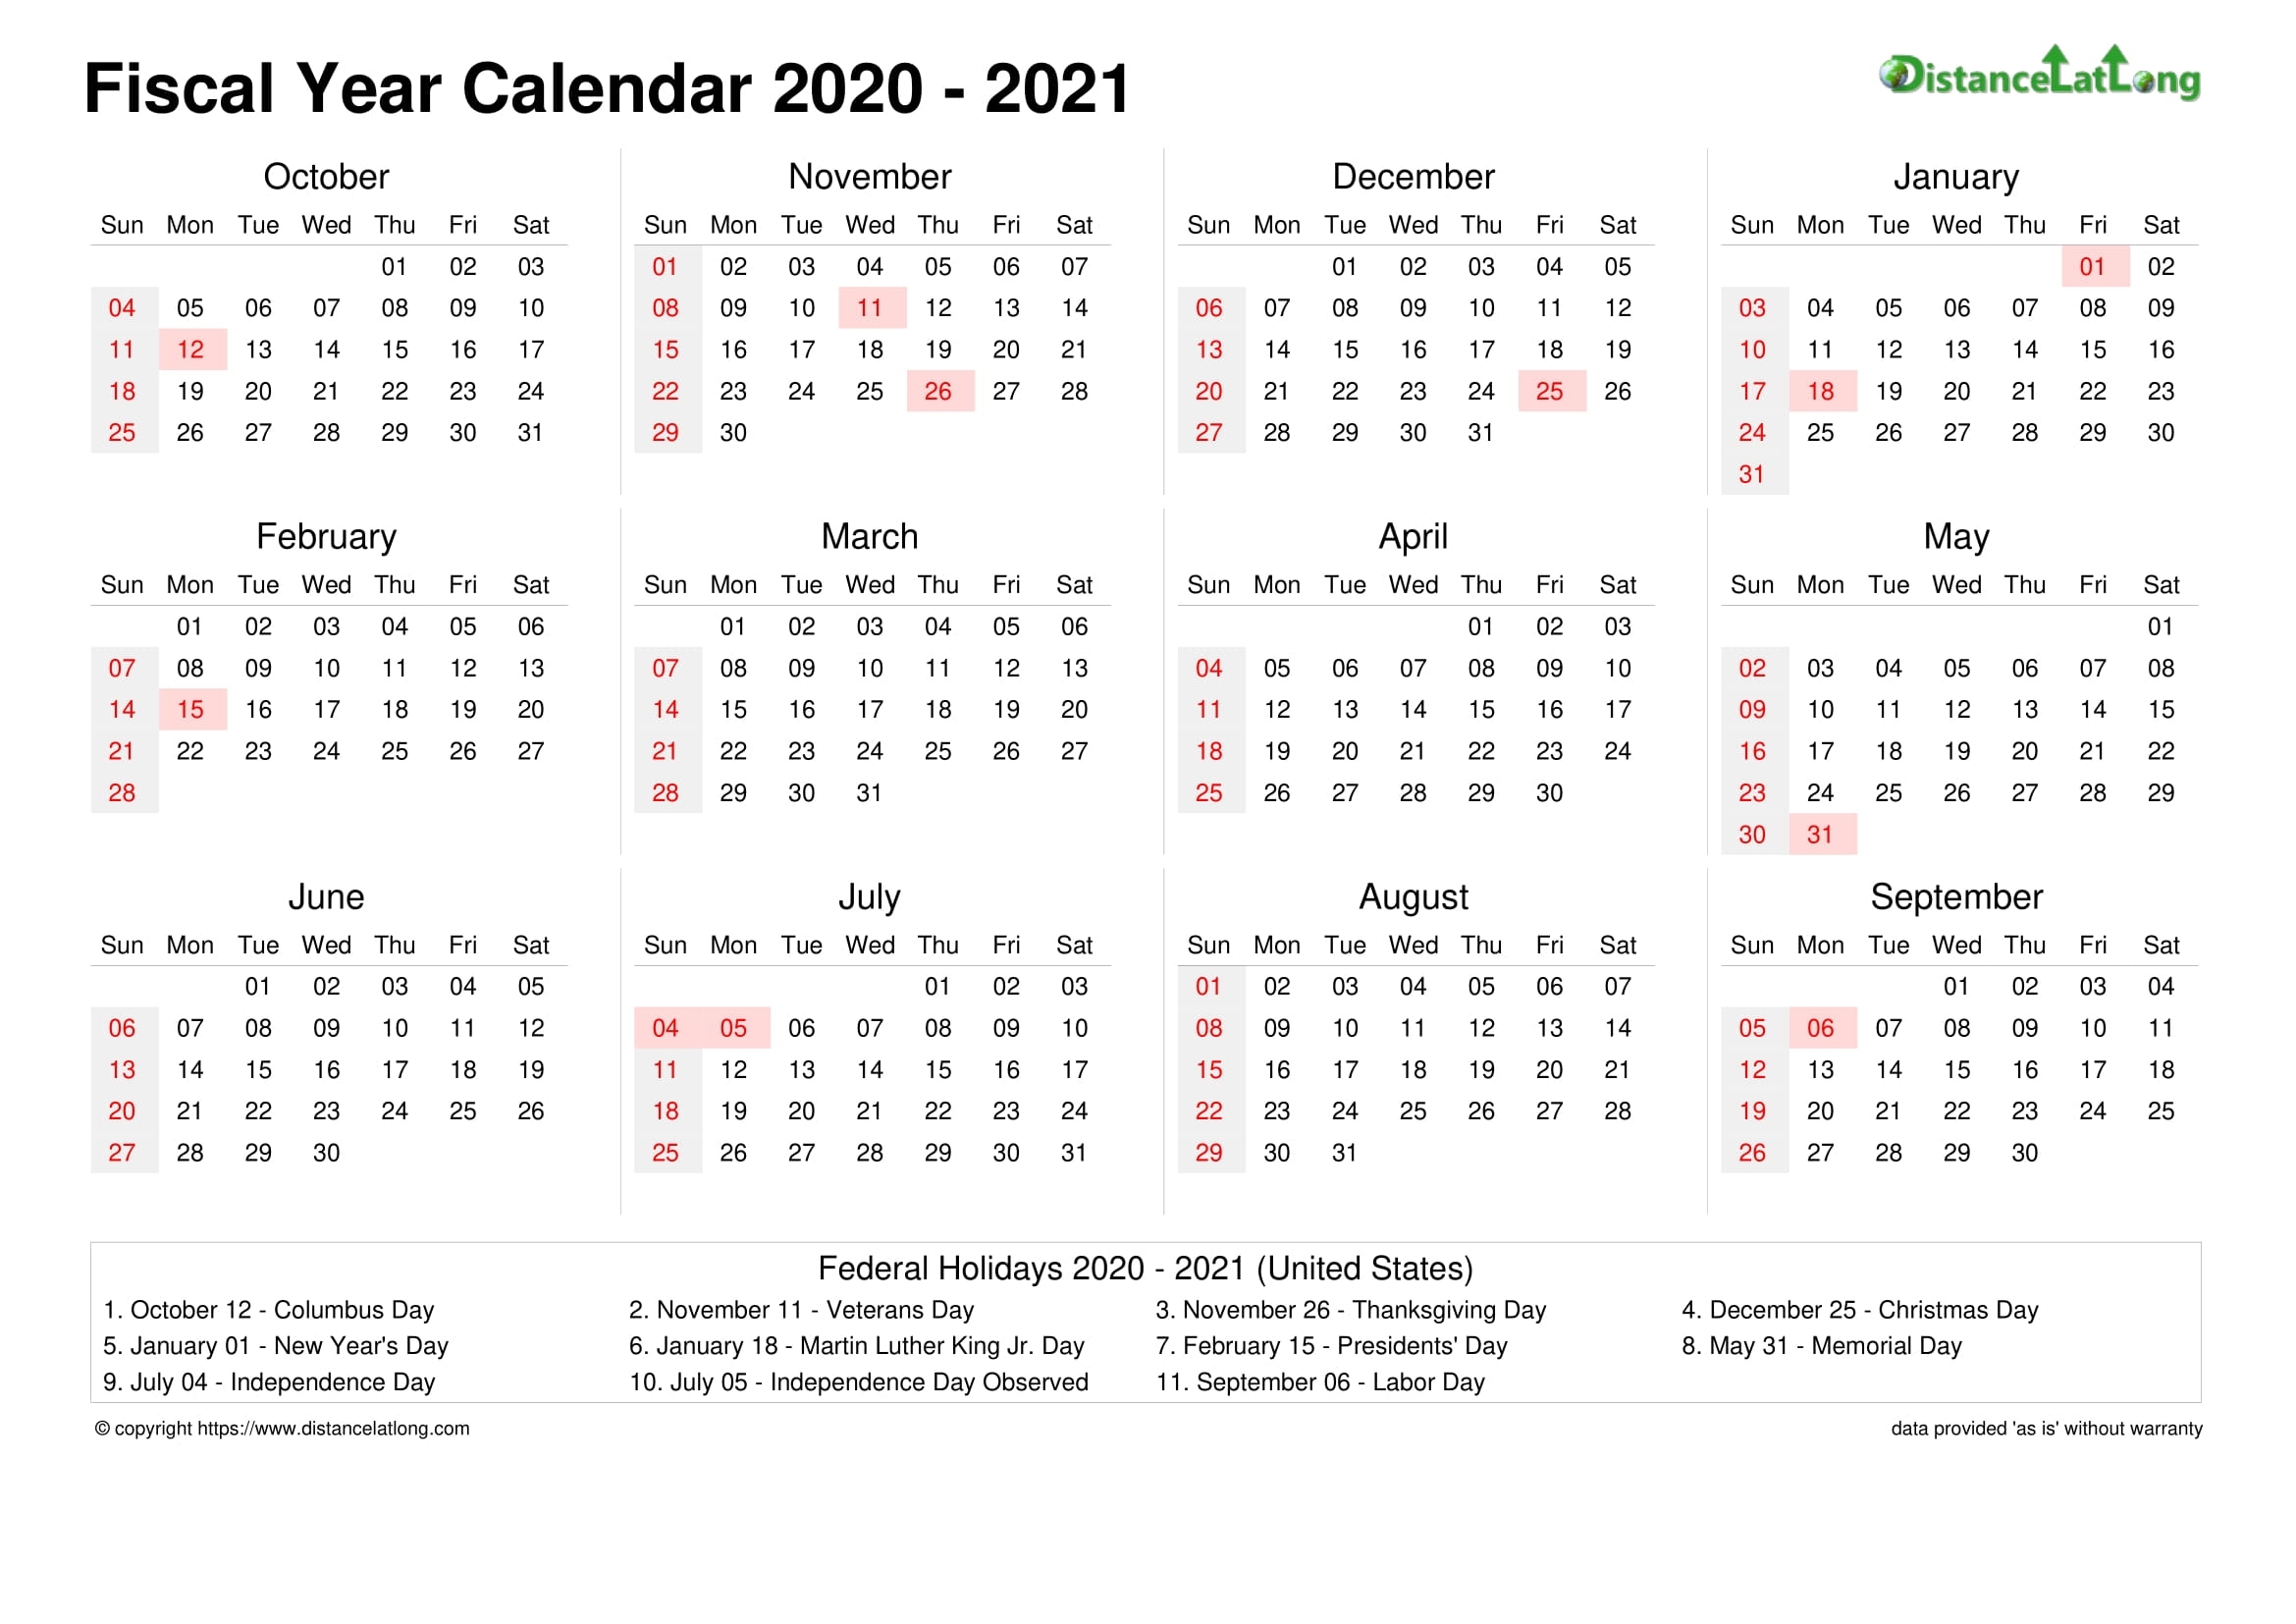 Fiscal Year 2020-2021 Calendar Templates, Free Printable